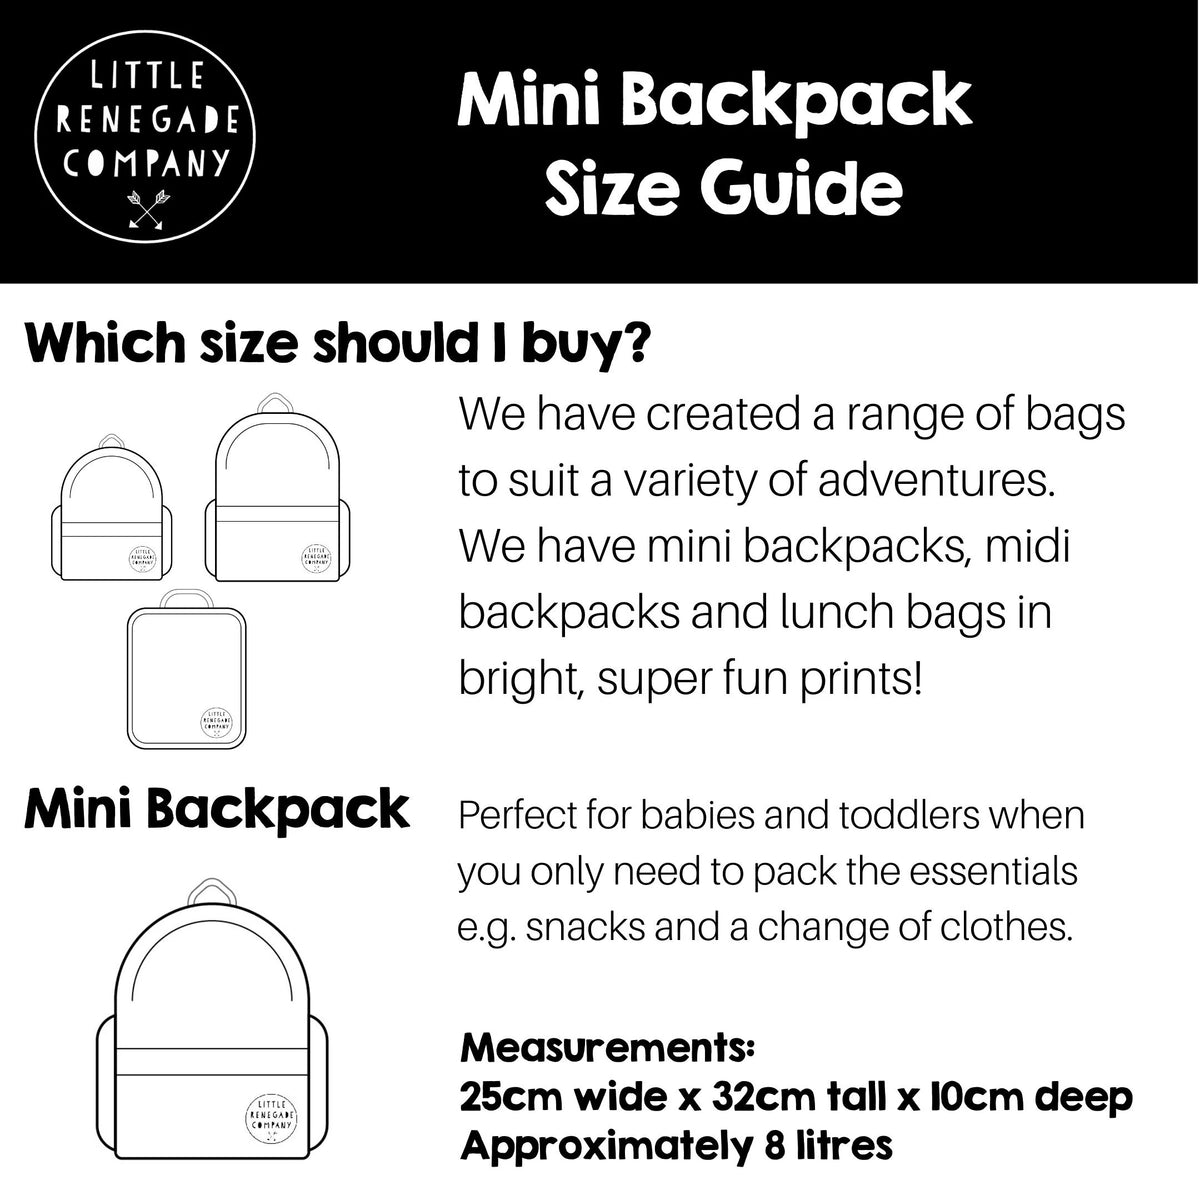 Little Renegade Company - Wild Backpack | MINI